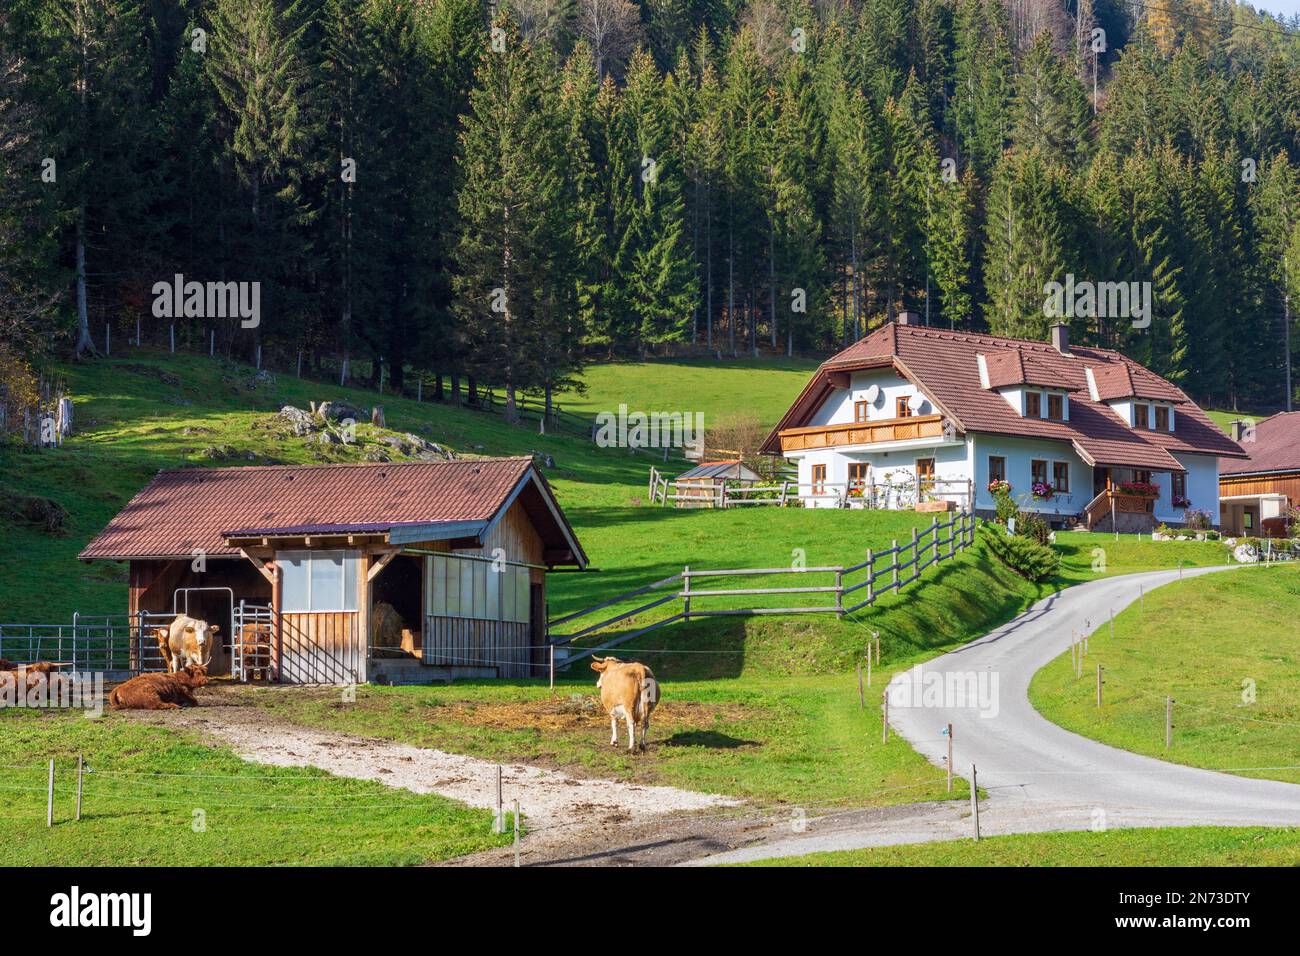 Rohr im Gebirge, farmhouse, cows in Vienna Alps, Lower Austria, Austria Stock Photo